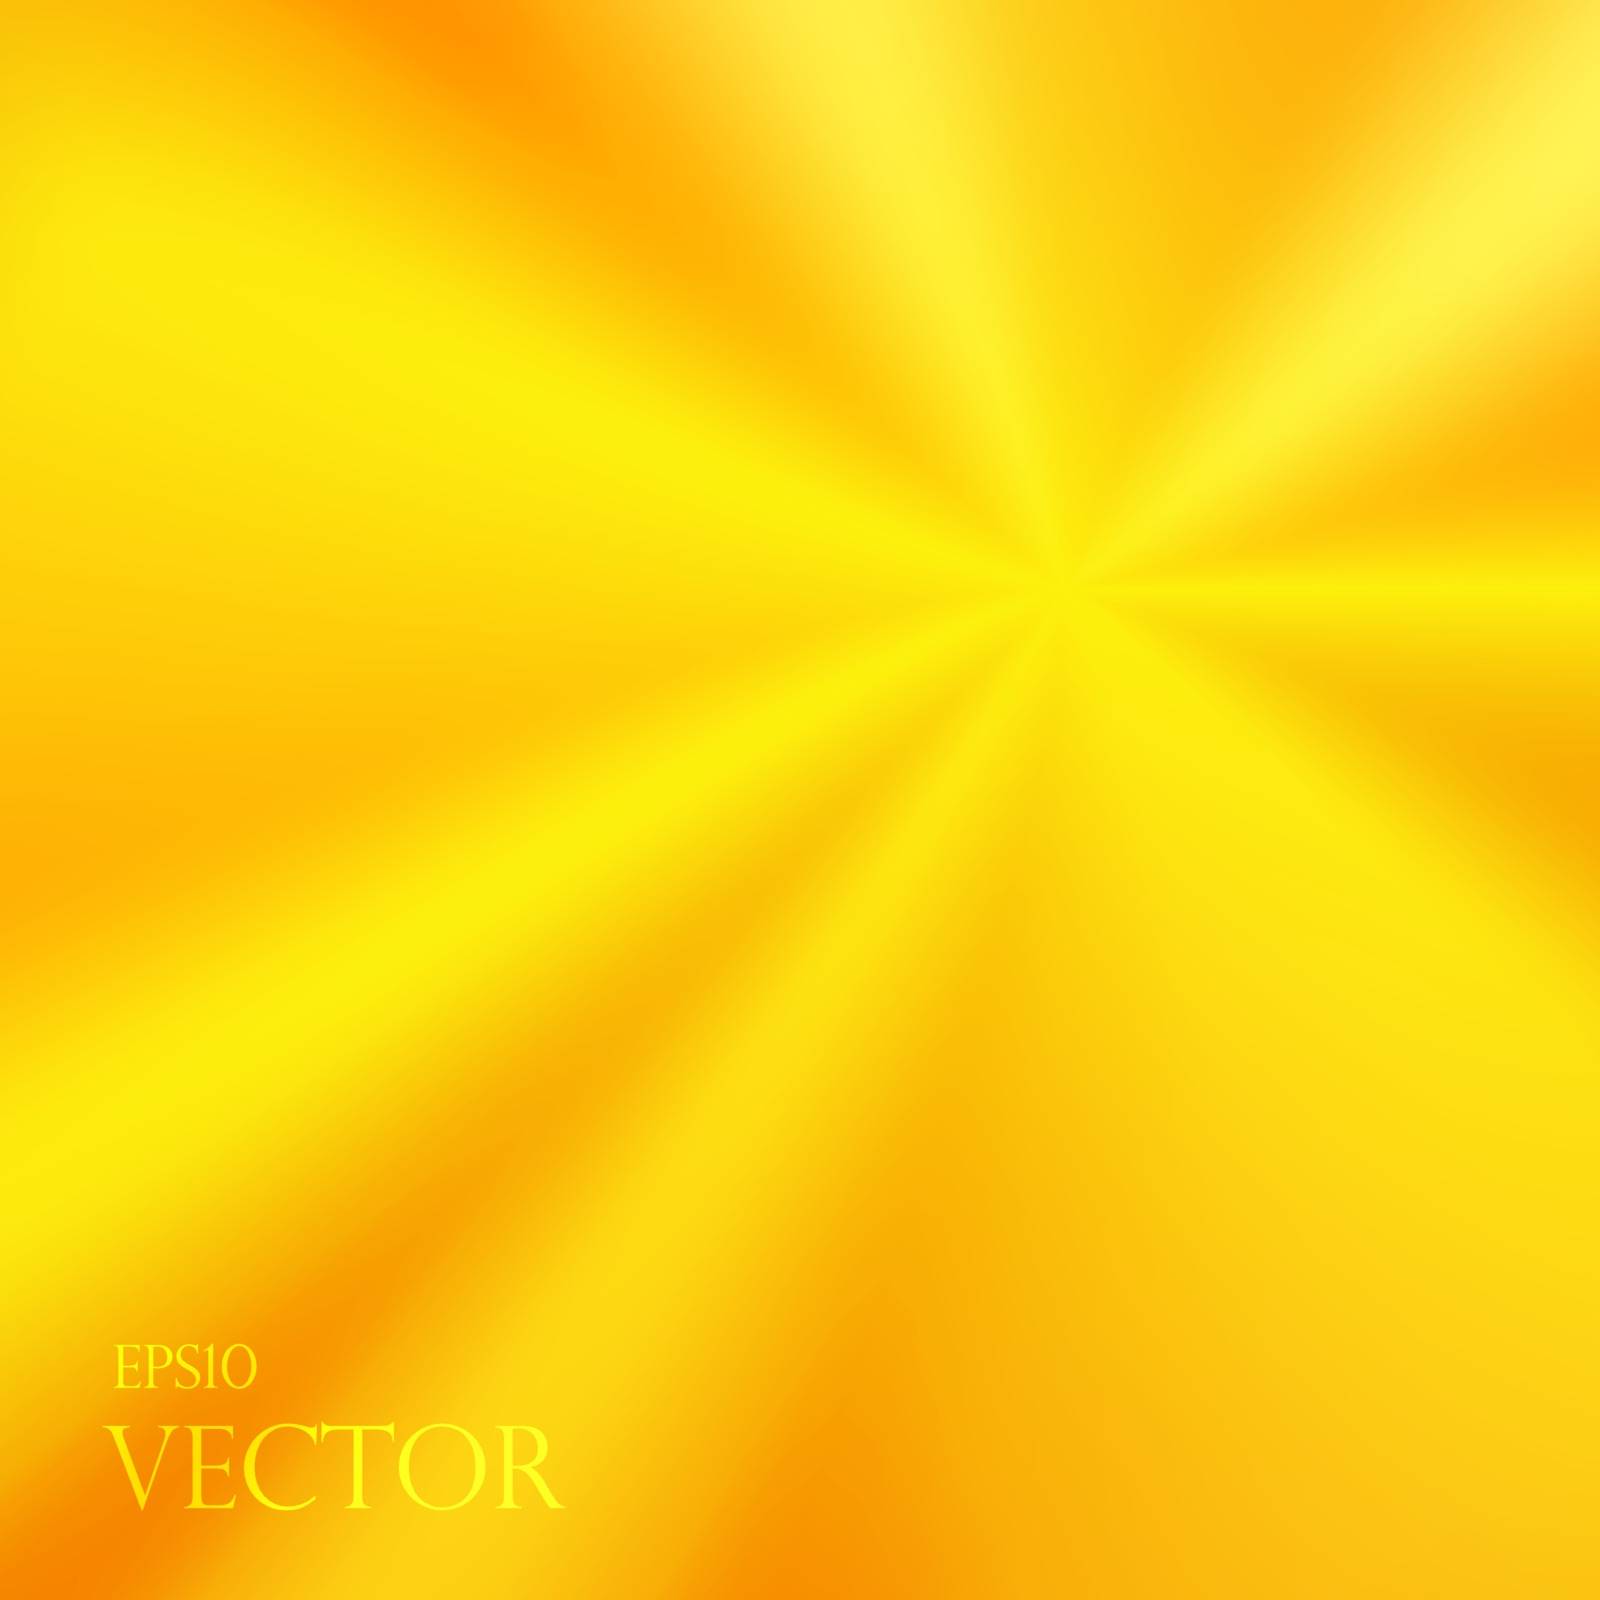 High contrast circular vector gradient eps 10 vector illustration